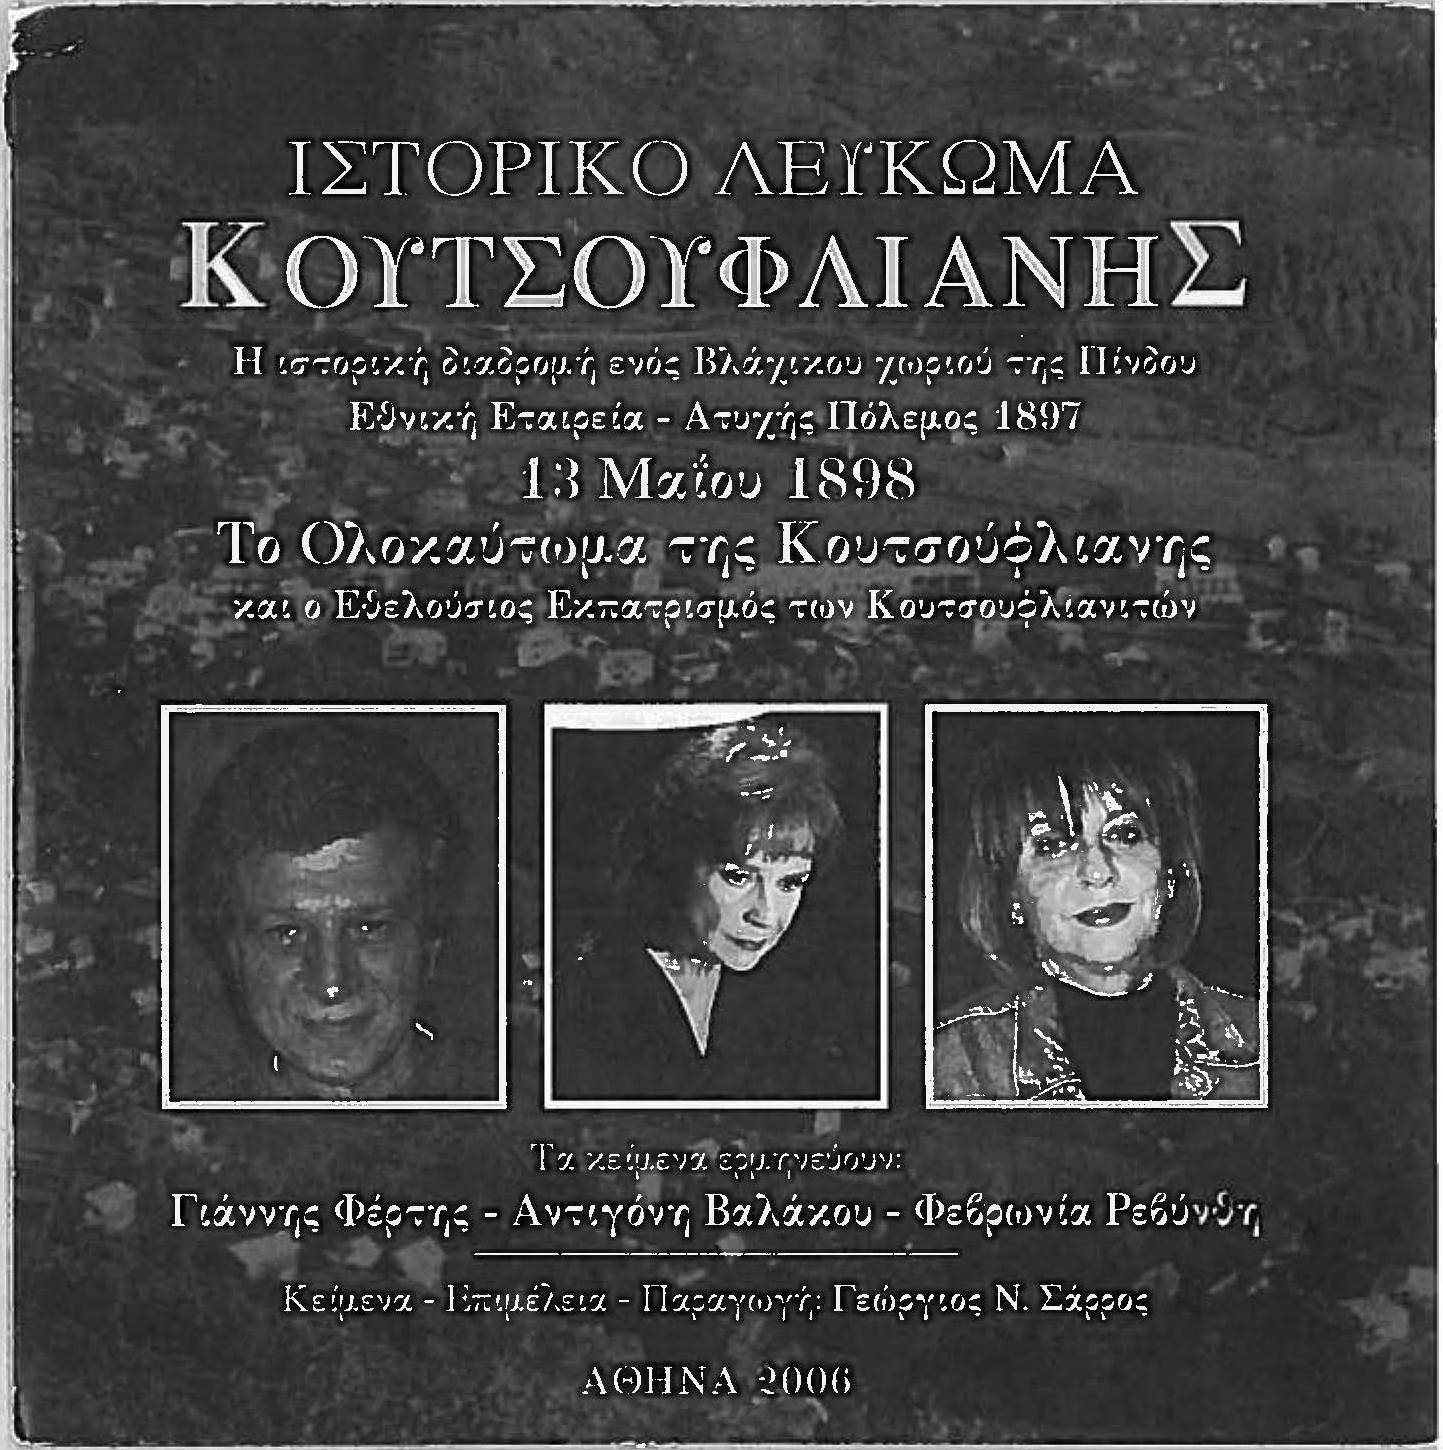 HISTORICAL ALBUM OF KOUTSOUFLIANI